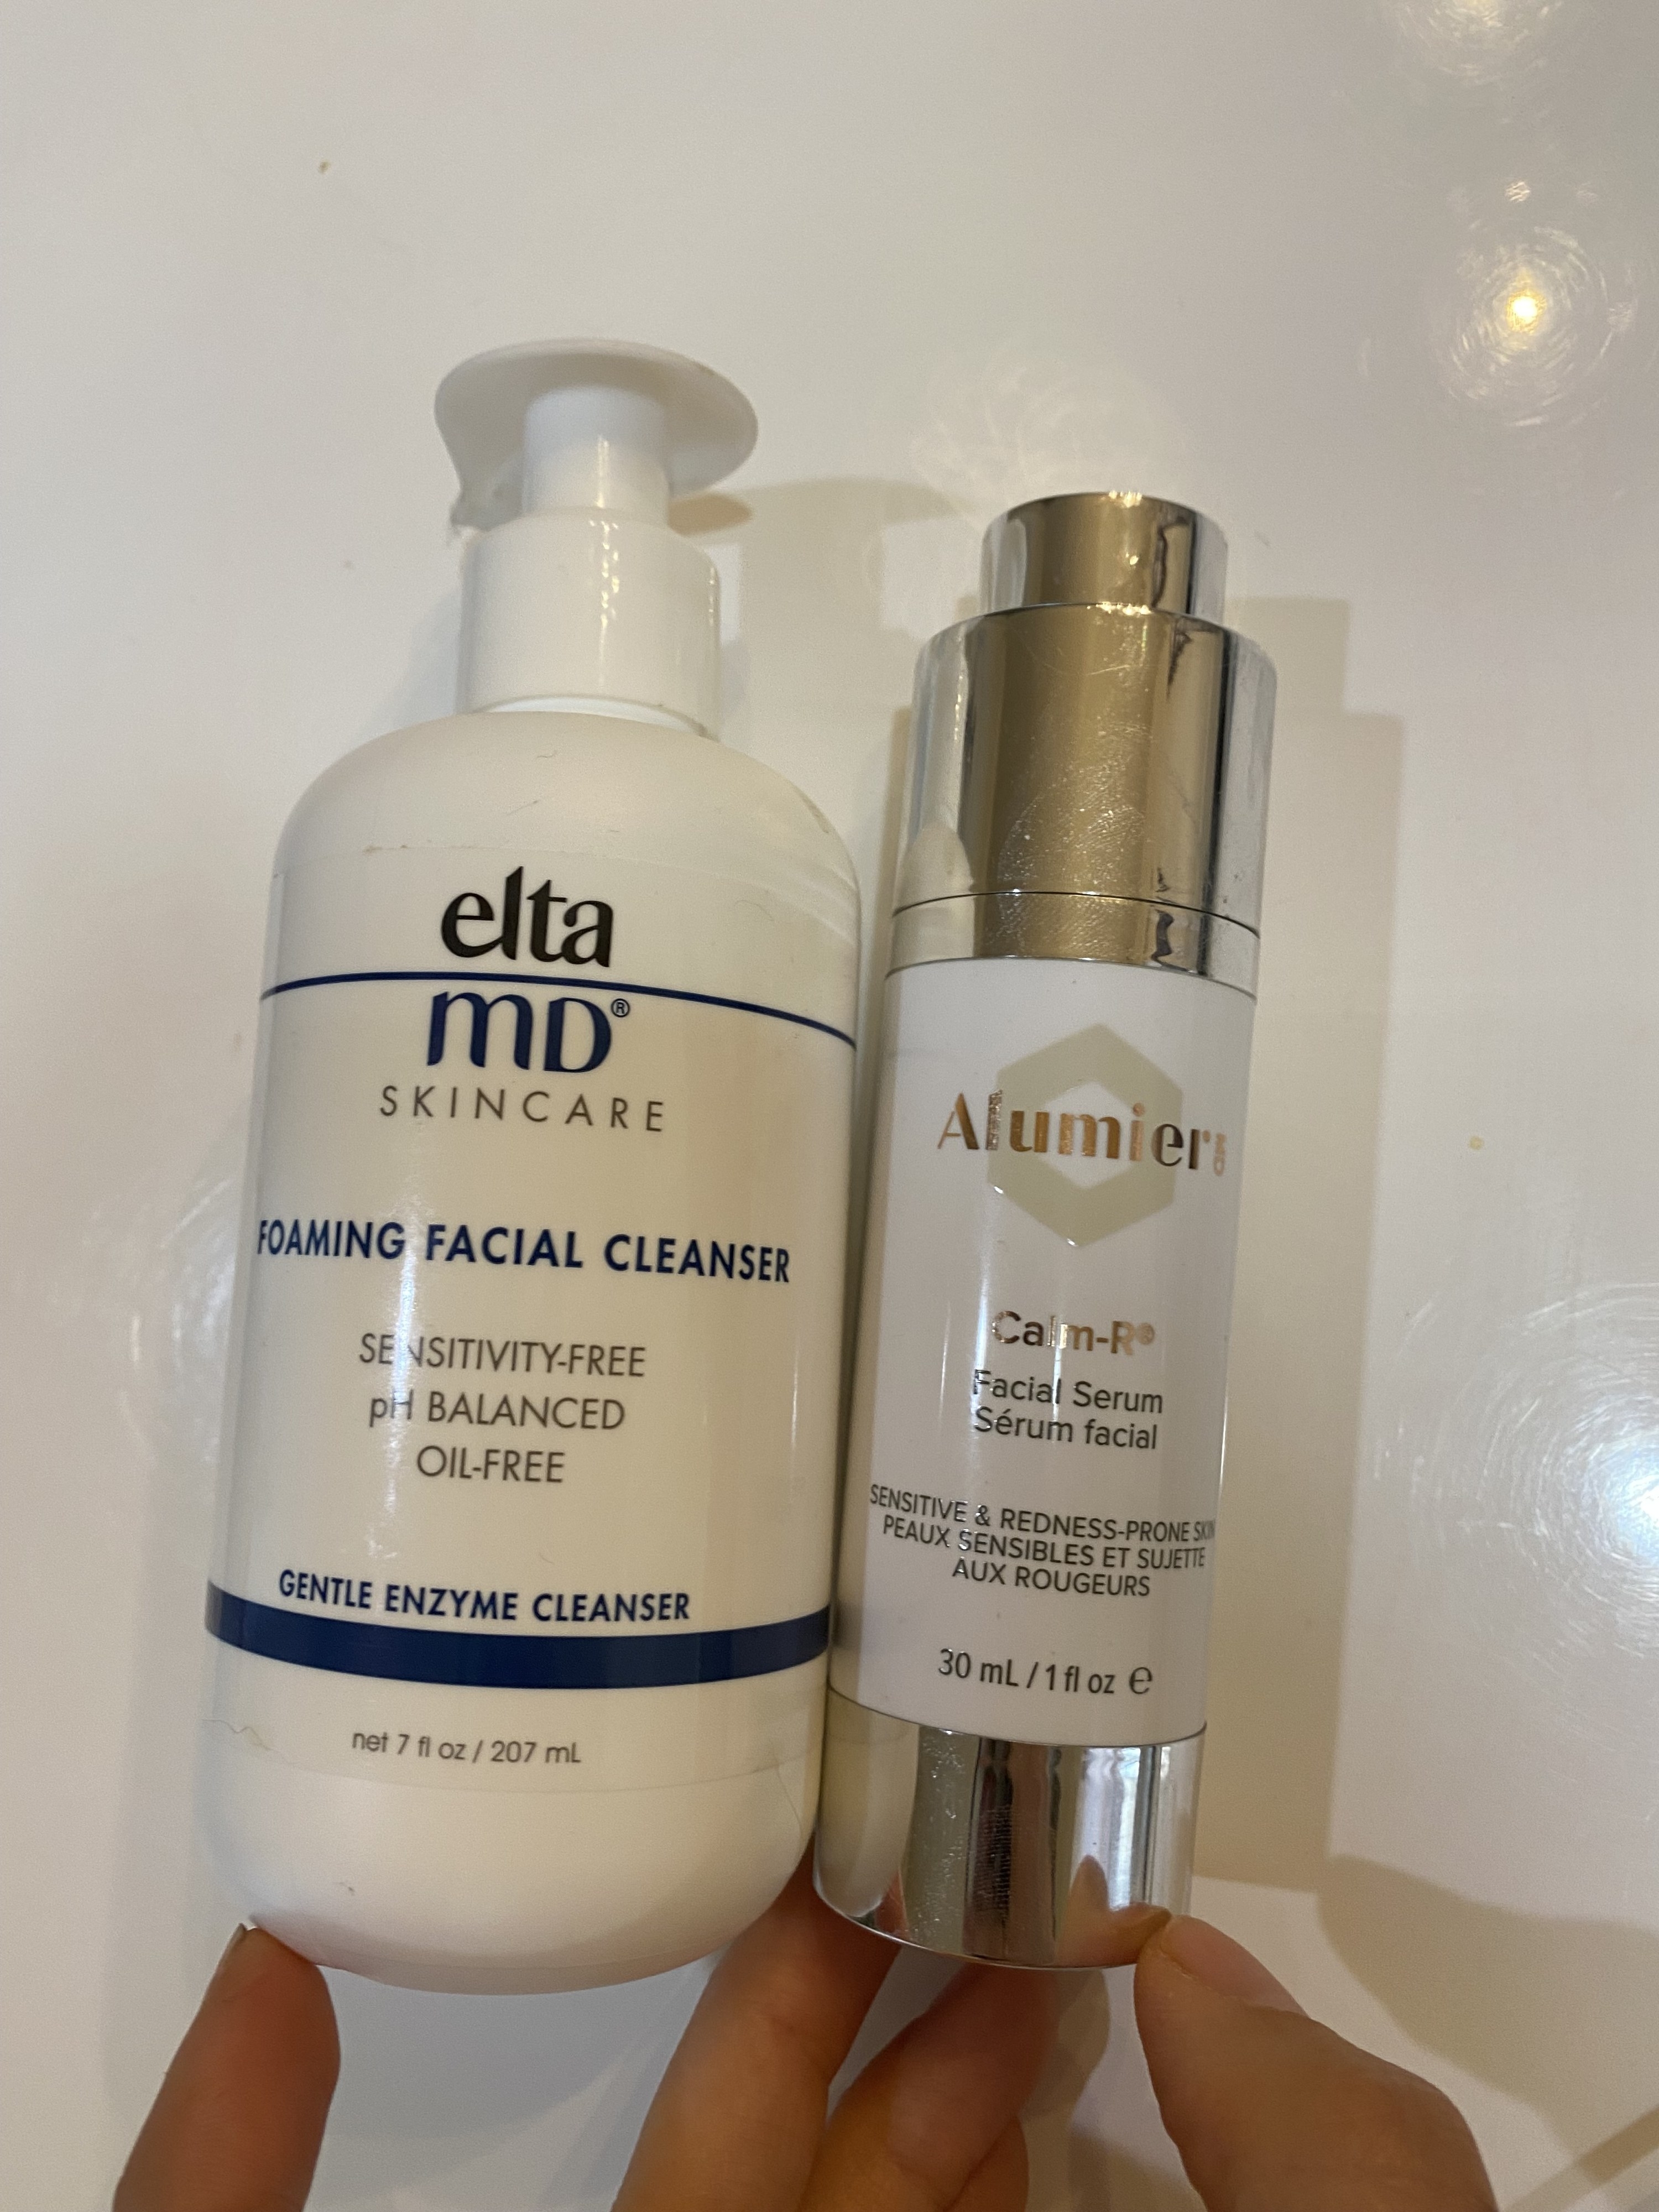 EltaMD foaming facial cleanser and Calm-R facial serum